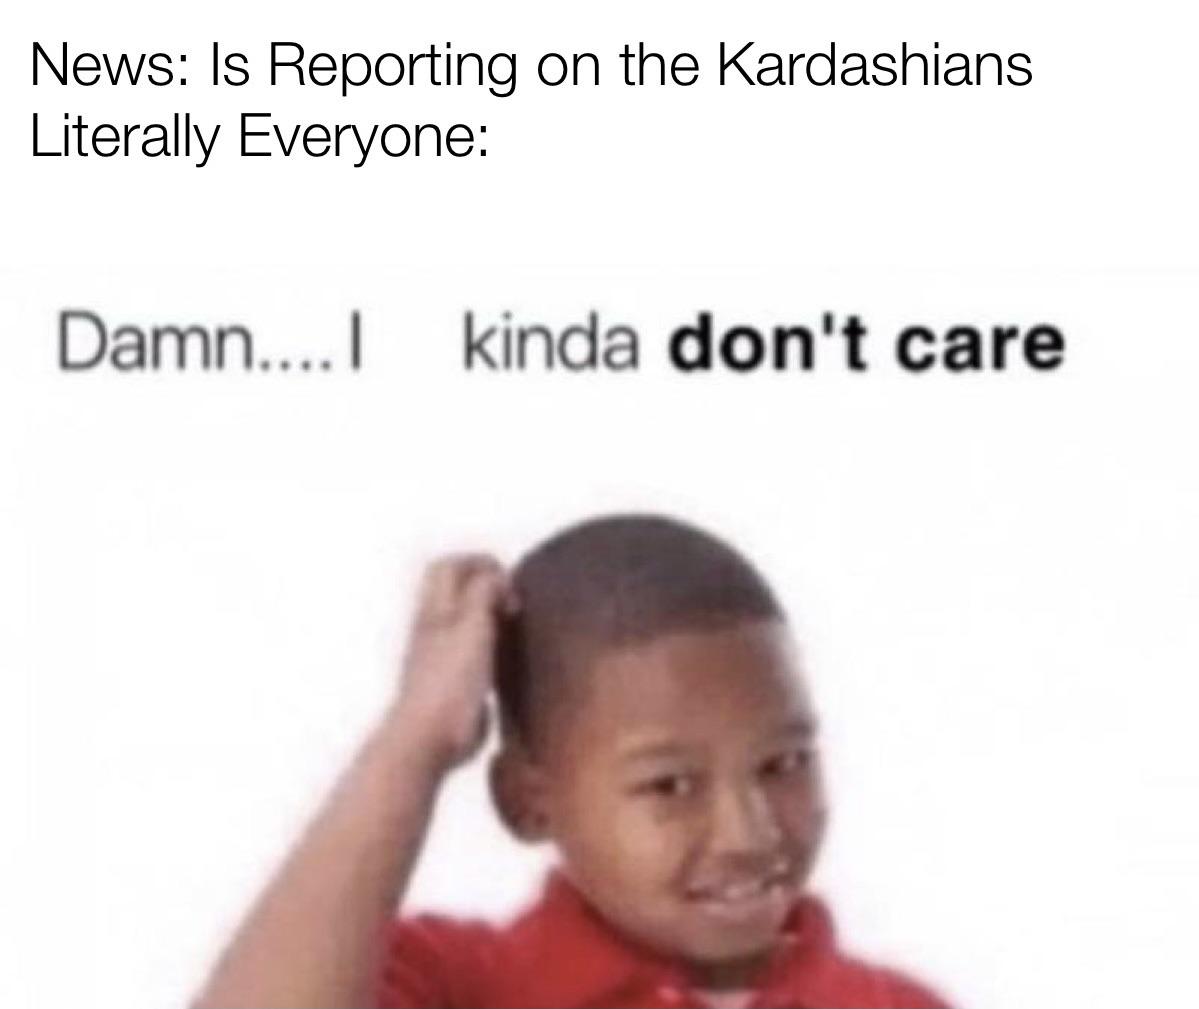 dank memes - funny memes - idc meme - News Is Reporting on the Kardashians Literally Everyone Damn....I kinda don't care